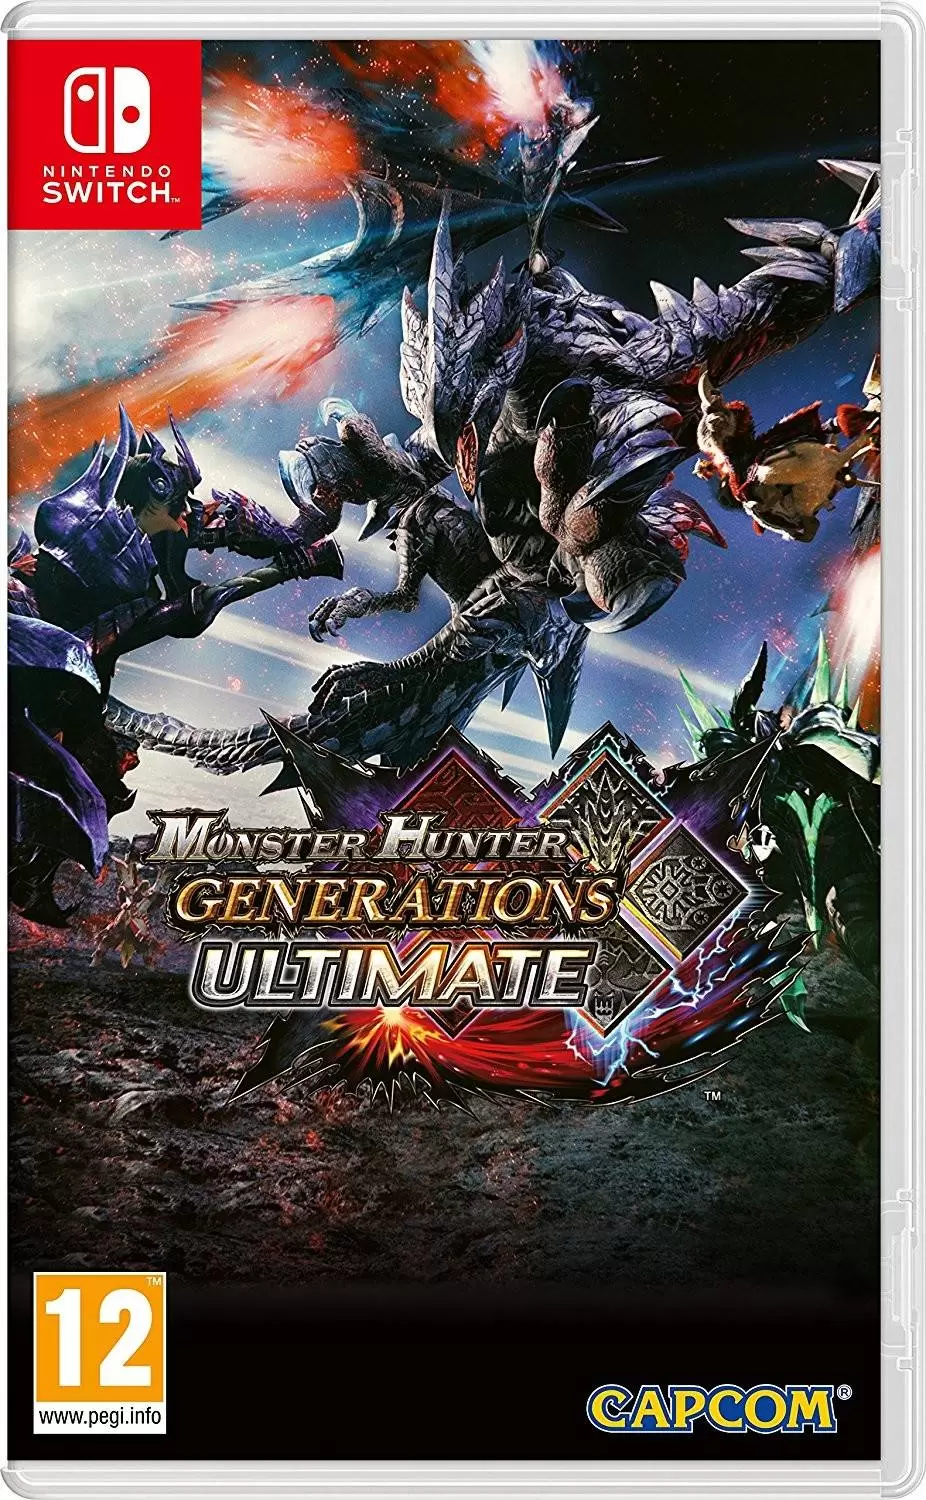 Nintendo Switch Games - Monster Hunter Generations Ultimate